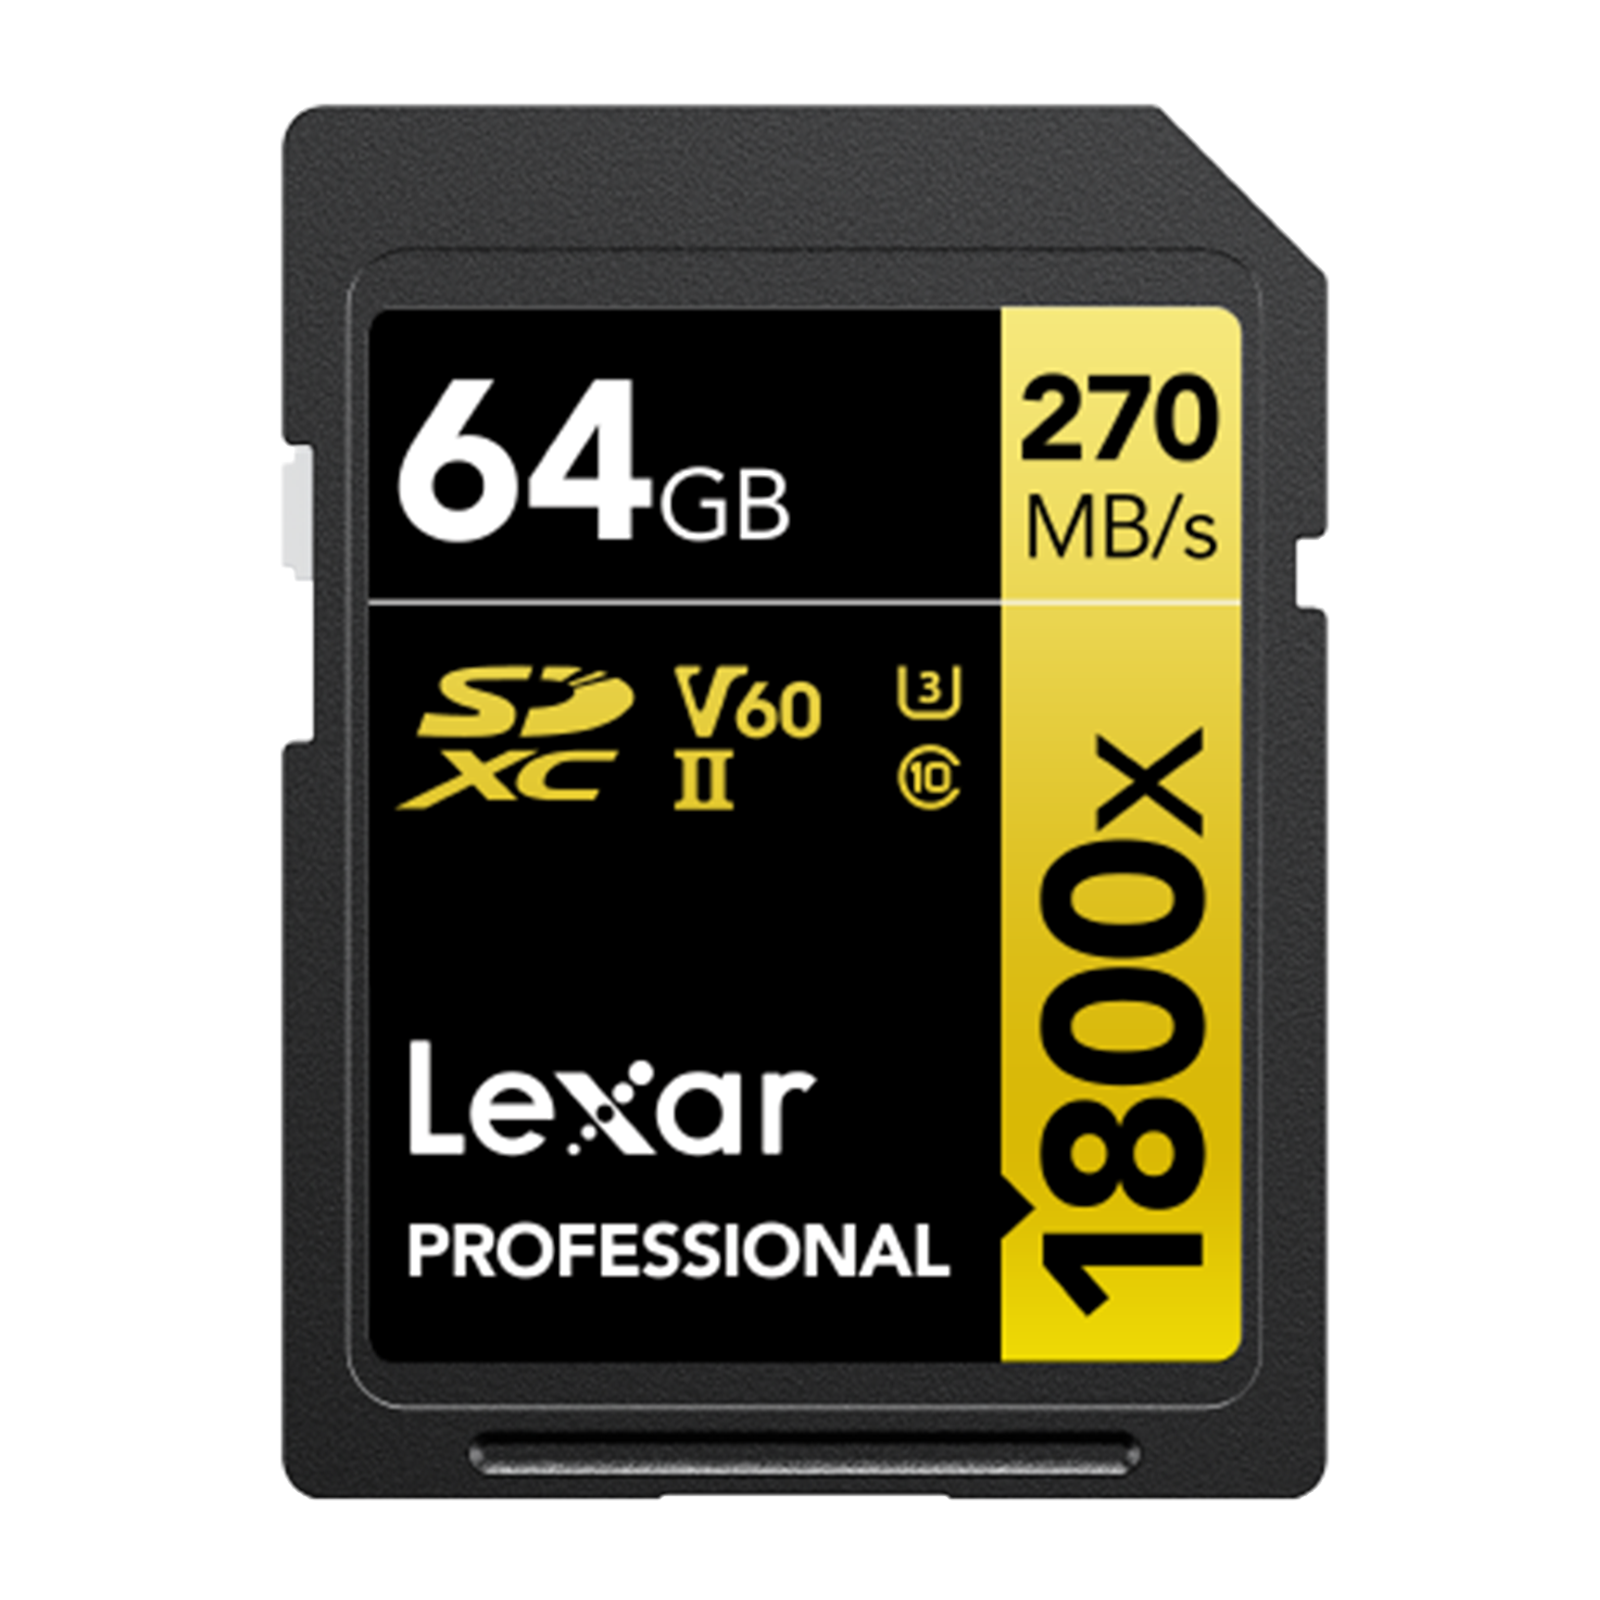 Lexar Professional 1800x GOLD Series SDXC 64GB Class 10 270MB/s Memory Card